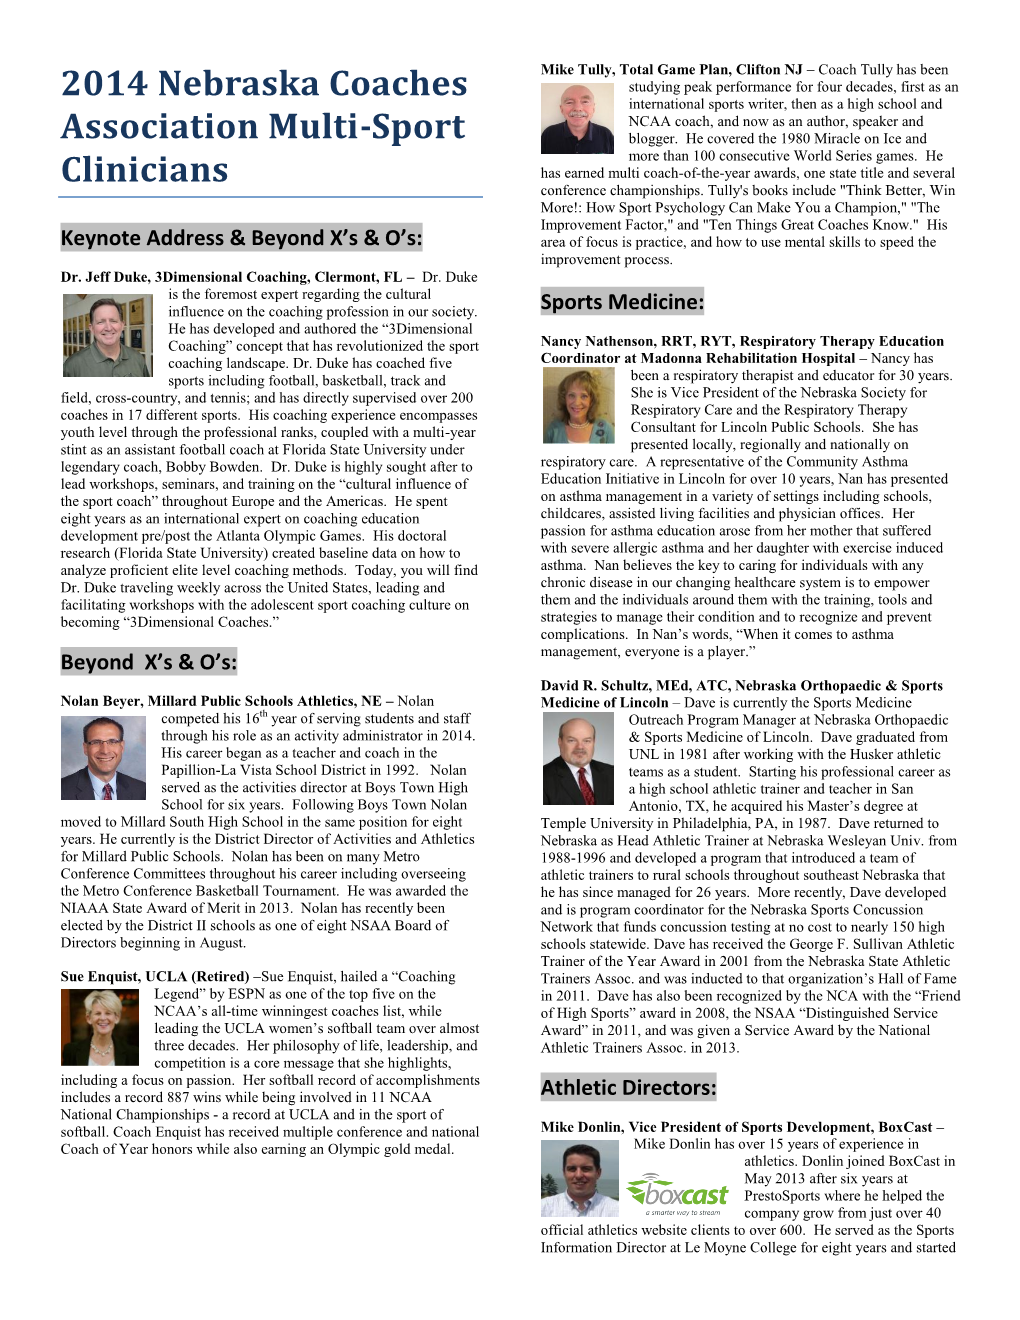 2014 Clinicians' Bios